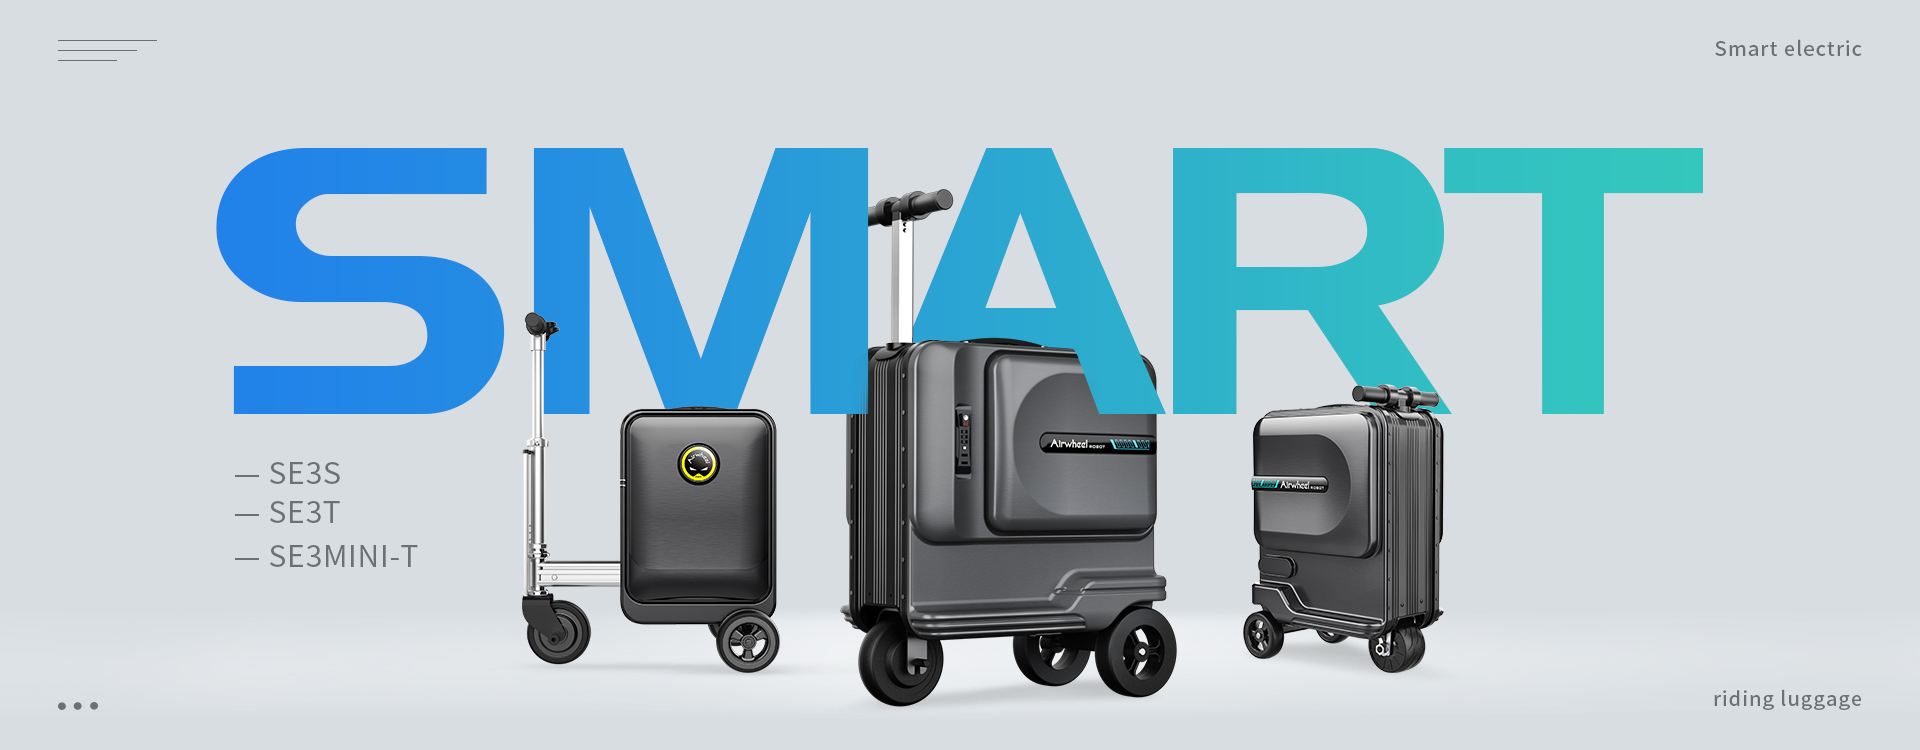 AIRWHEEL Smart suitcase IPO